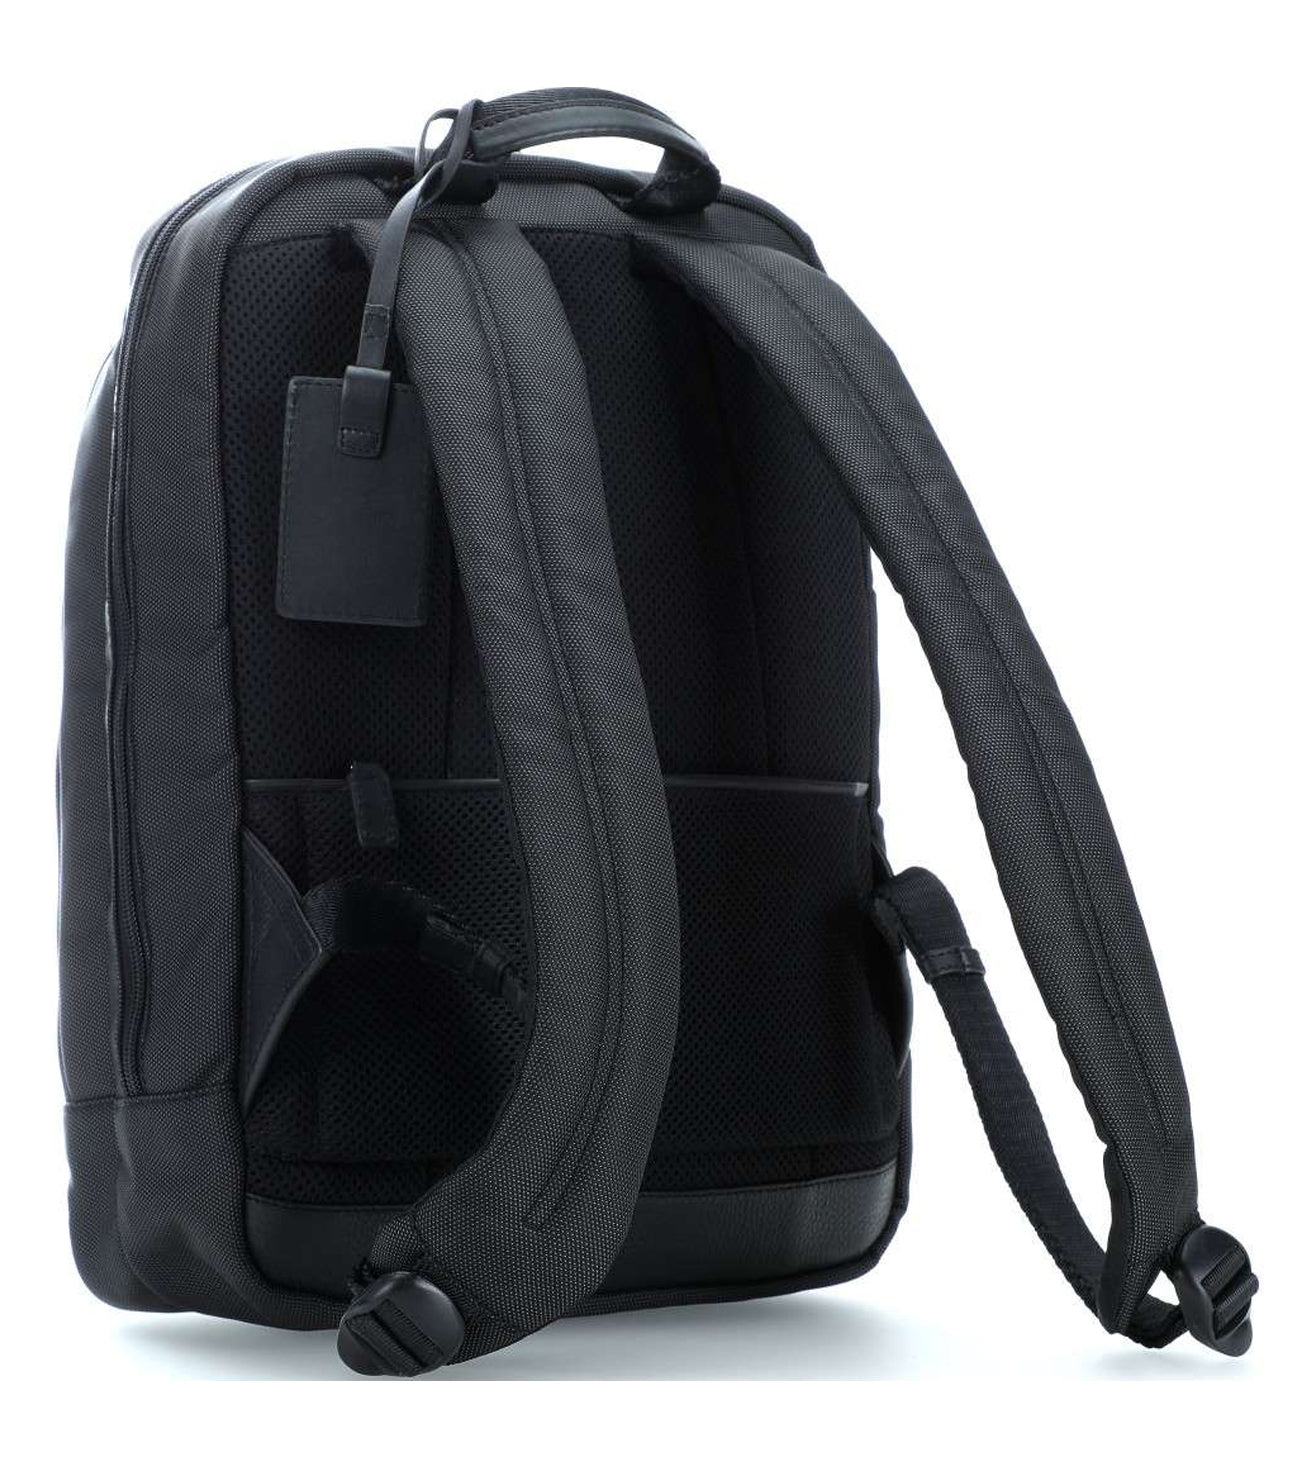 Bric's Monza Unisex Black Backpack